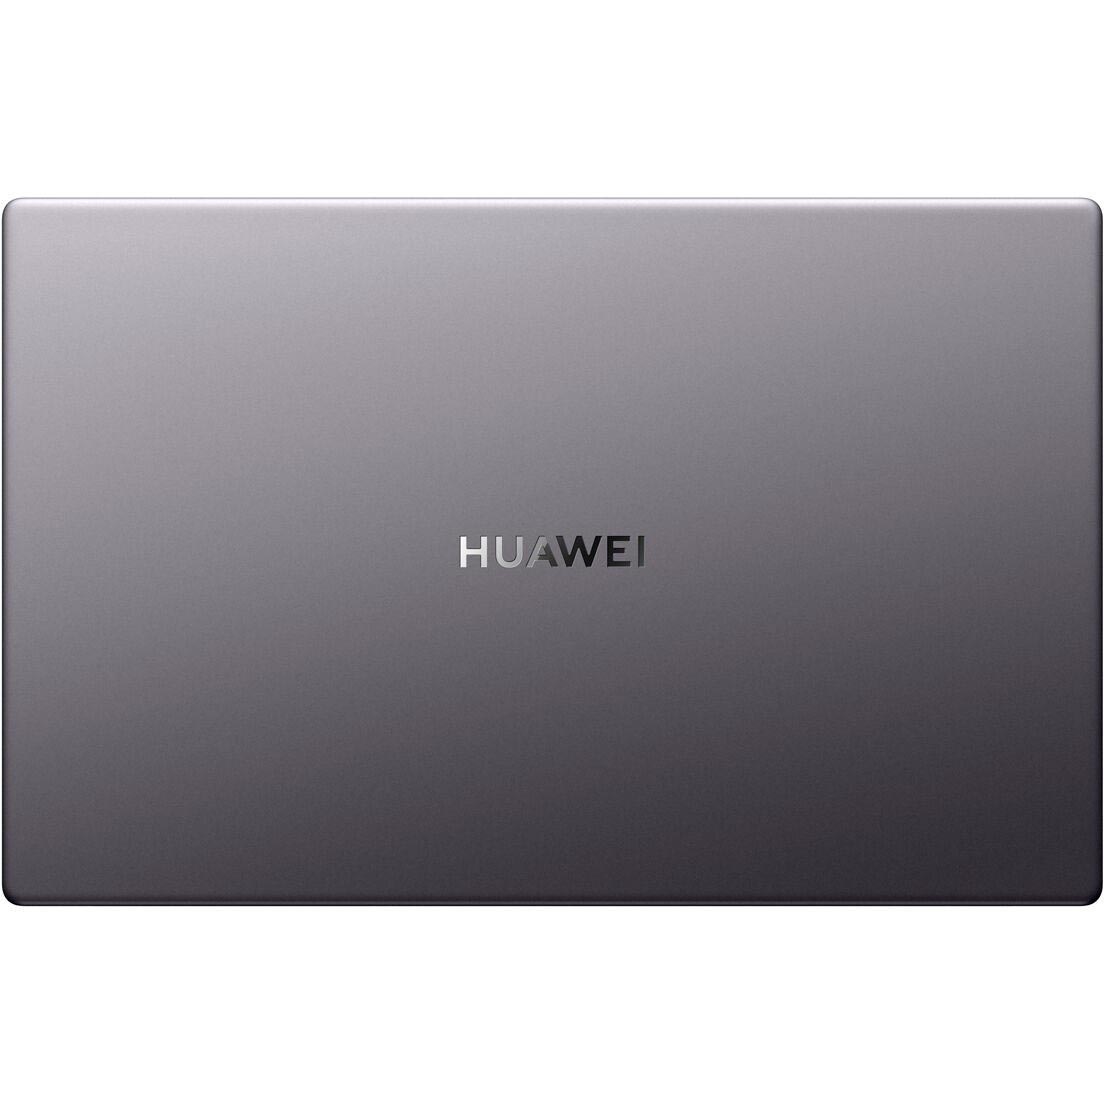 Matebook d bode wdh9. Ноутбук Huawei MATEBOOK d15 bod wdi9. Ноутбук ASUS x540ma-gq035. Ноутбук Huawei MATEBOOK D 14 NBM-wdq9 8+512gb Space Grey. Ультрабук Huawei MATEBOOK D 14.